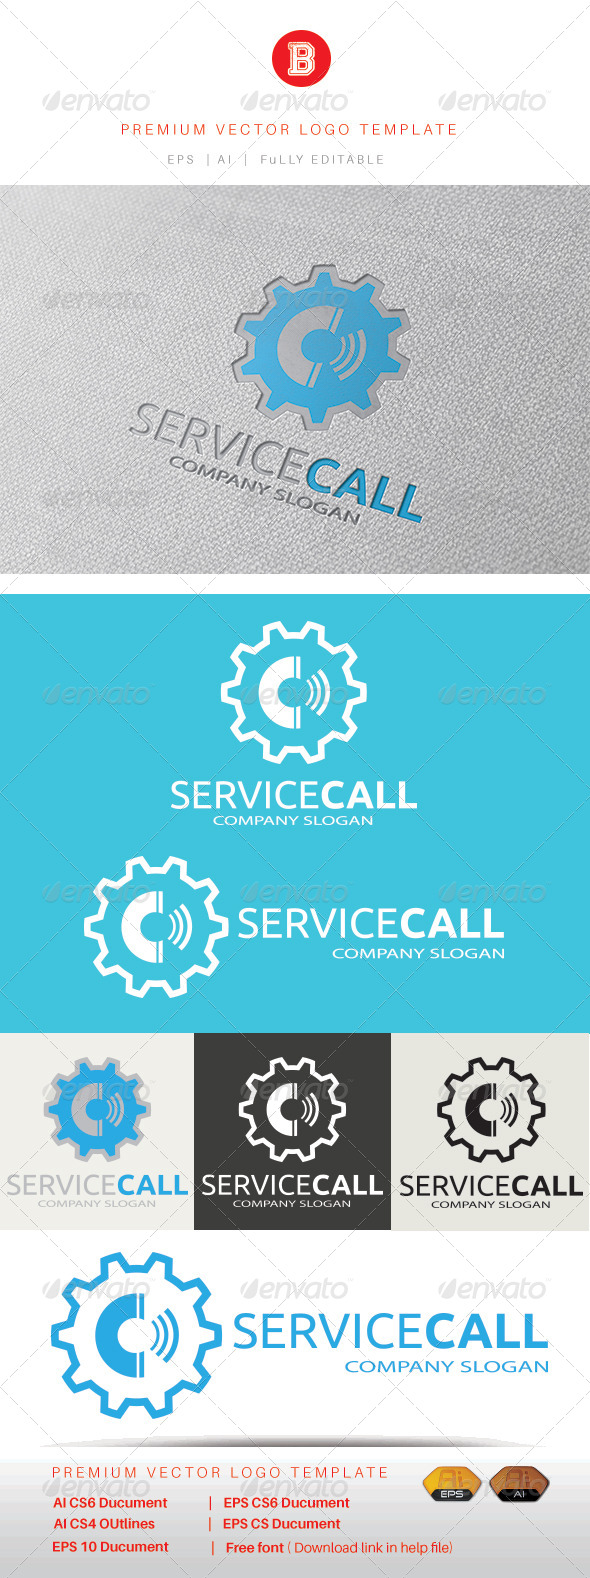 Service Call